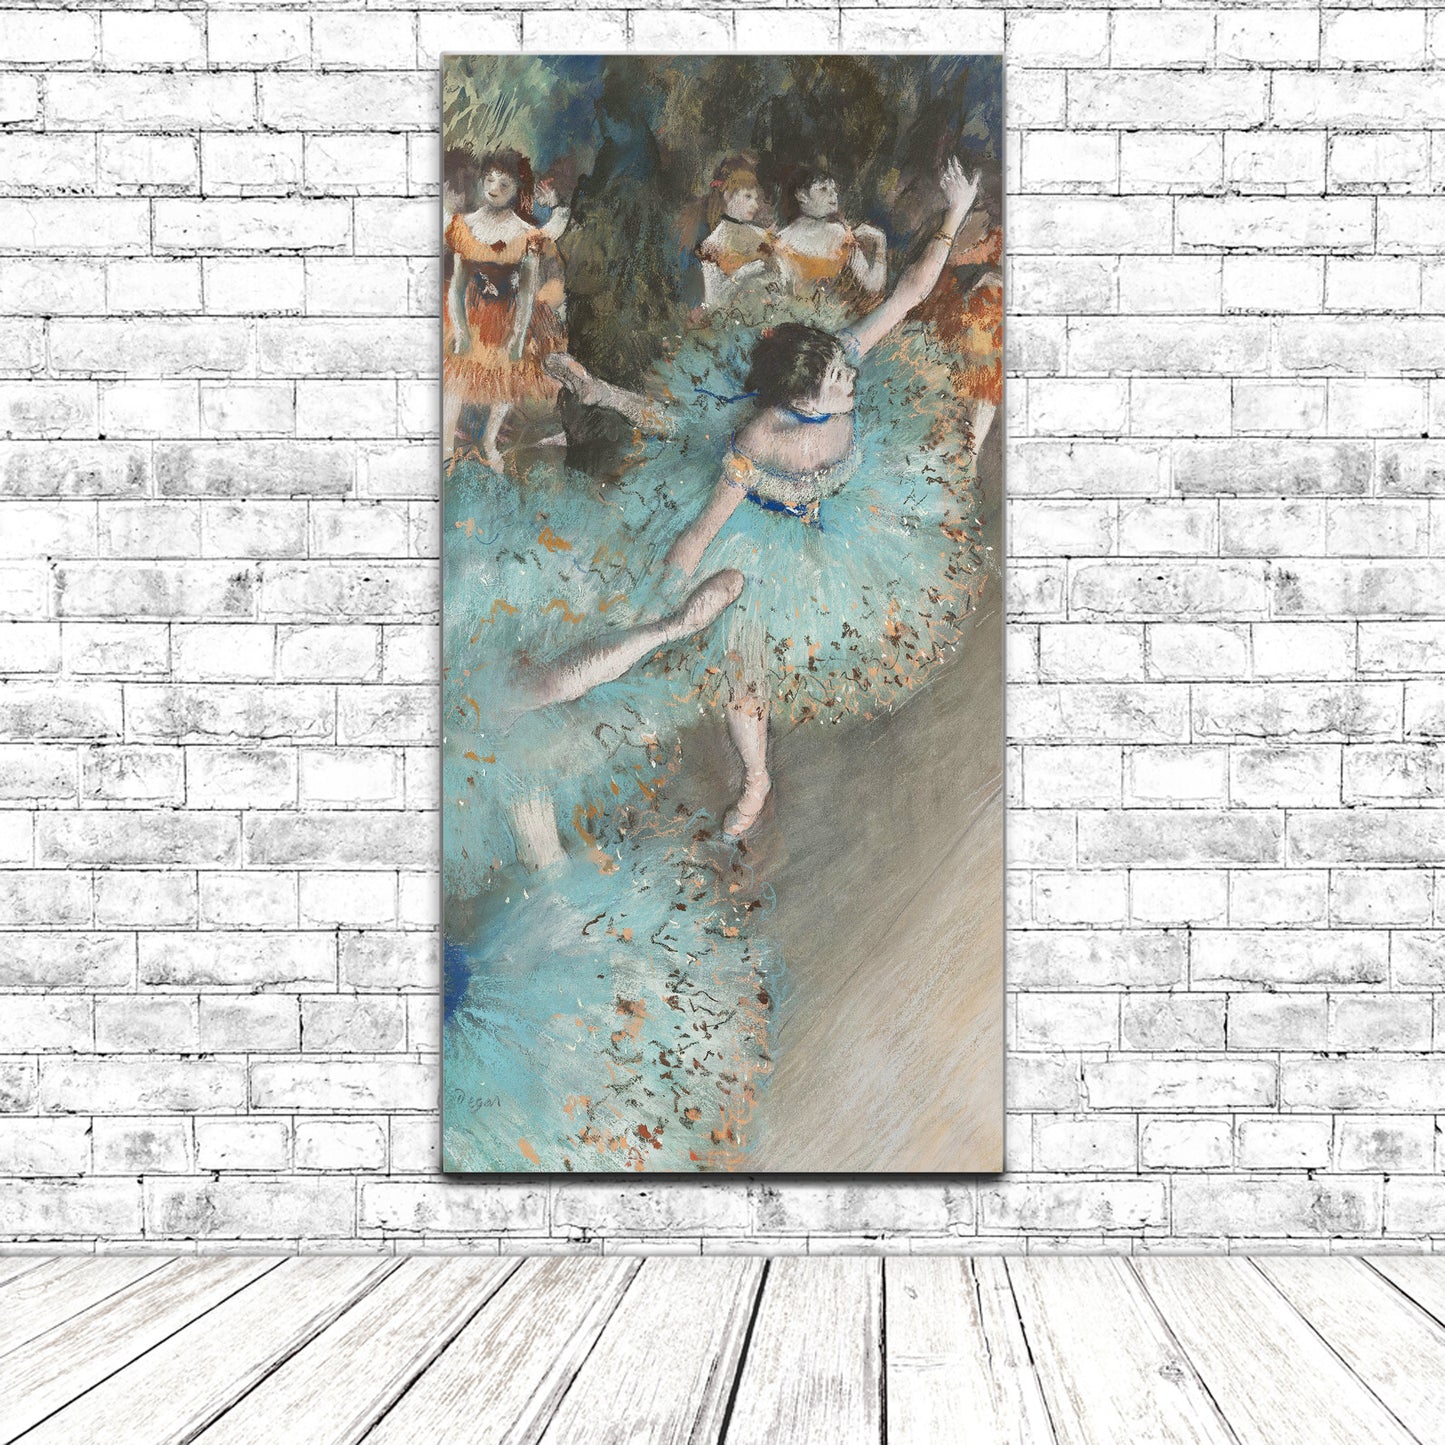 Swaying Dancer by Edger Degas